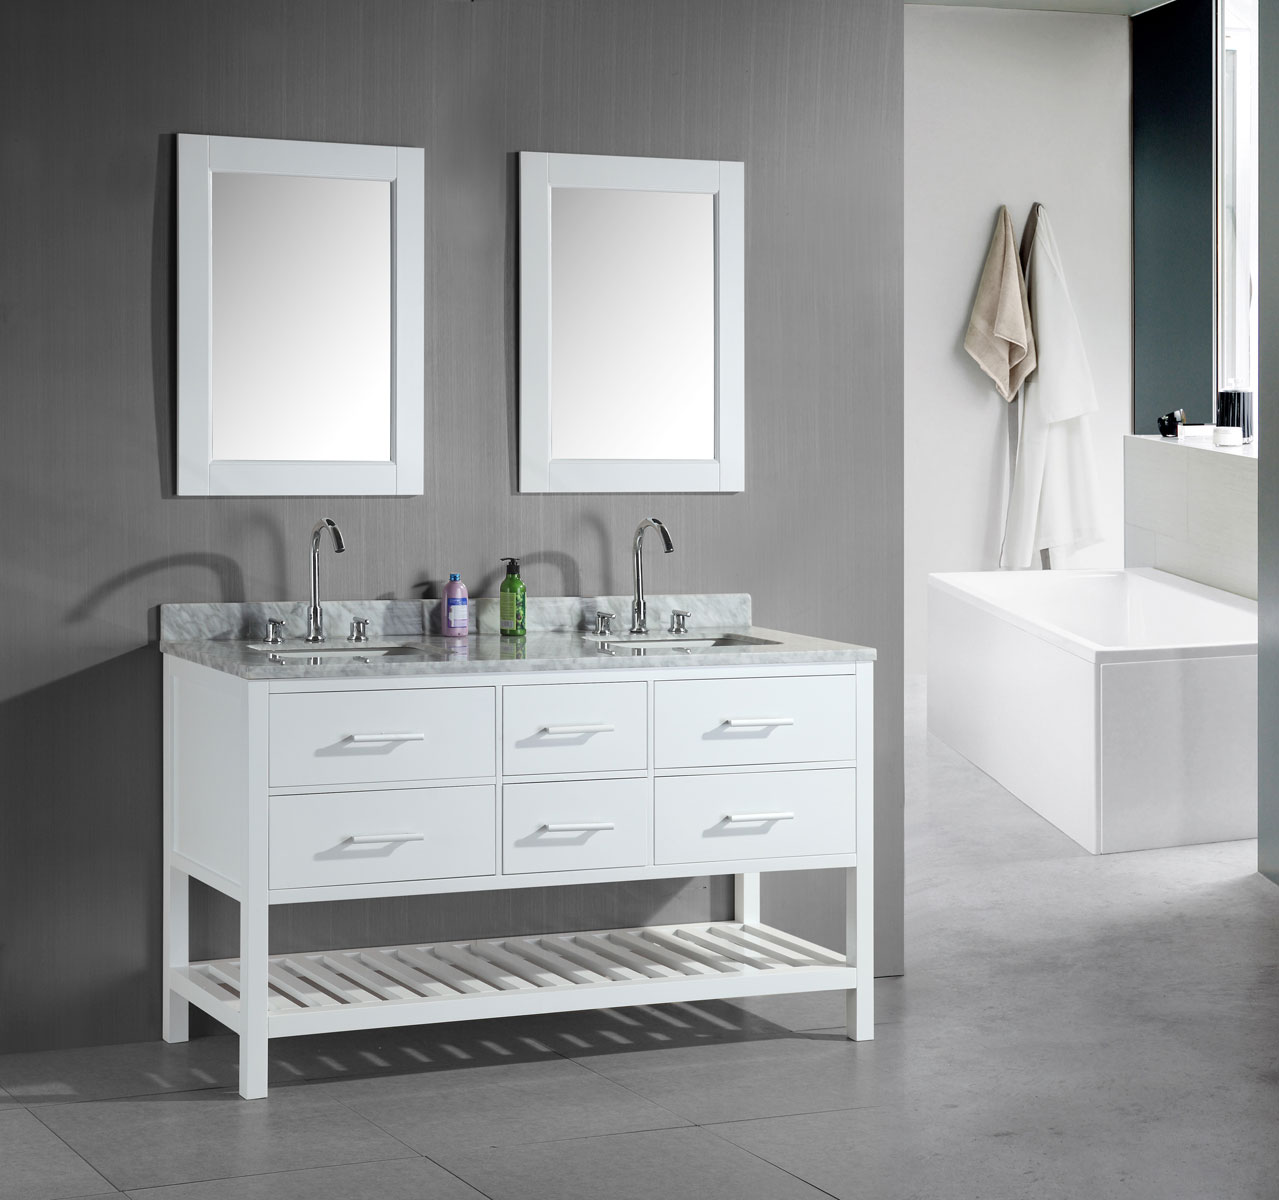 Bathtub Design Bathroom Rectangular Bathtub Design Feats Modern Bathroom Vanity With Open Storage Idea And Beautiful Wall Mirrors Modern Bathroom Vanity Ideas